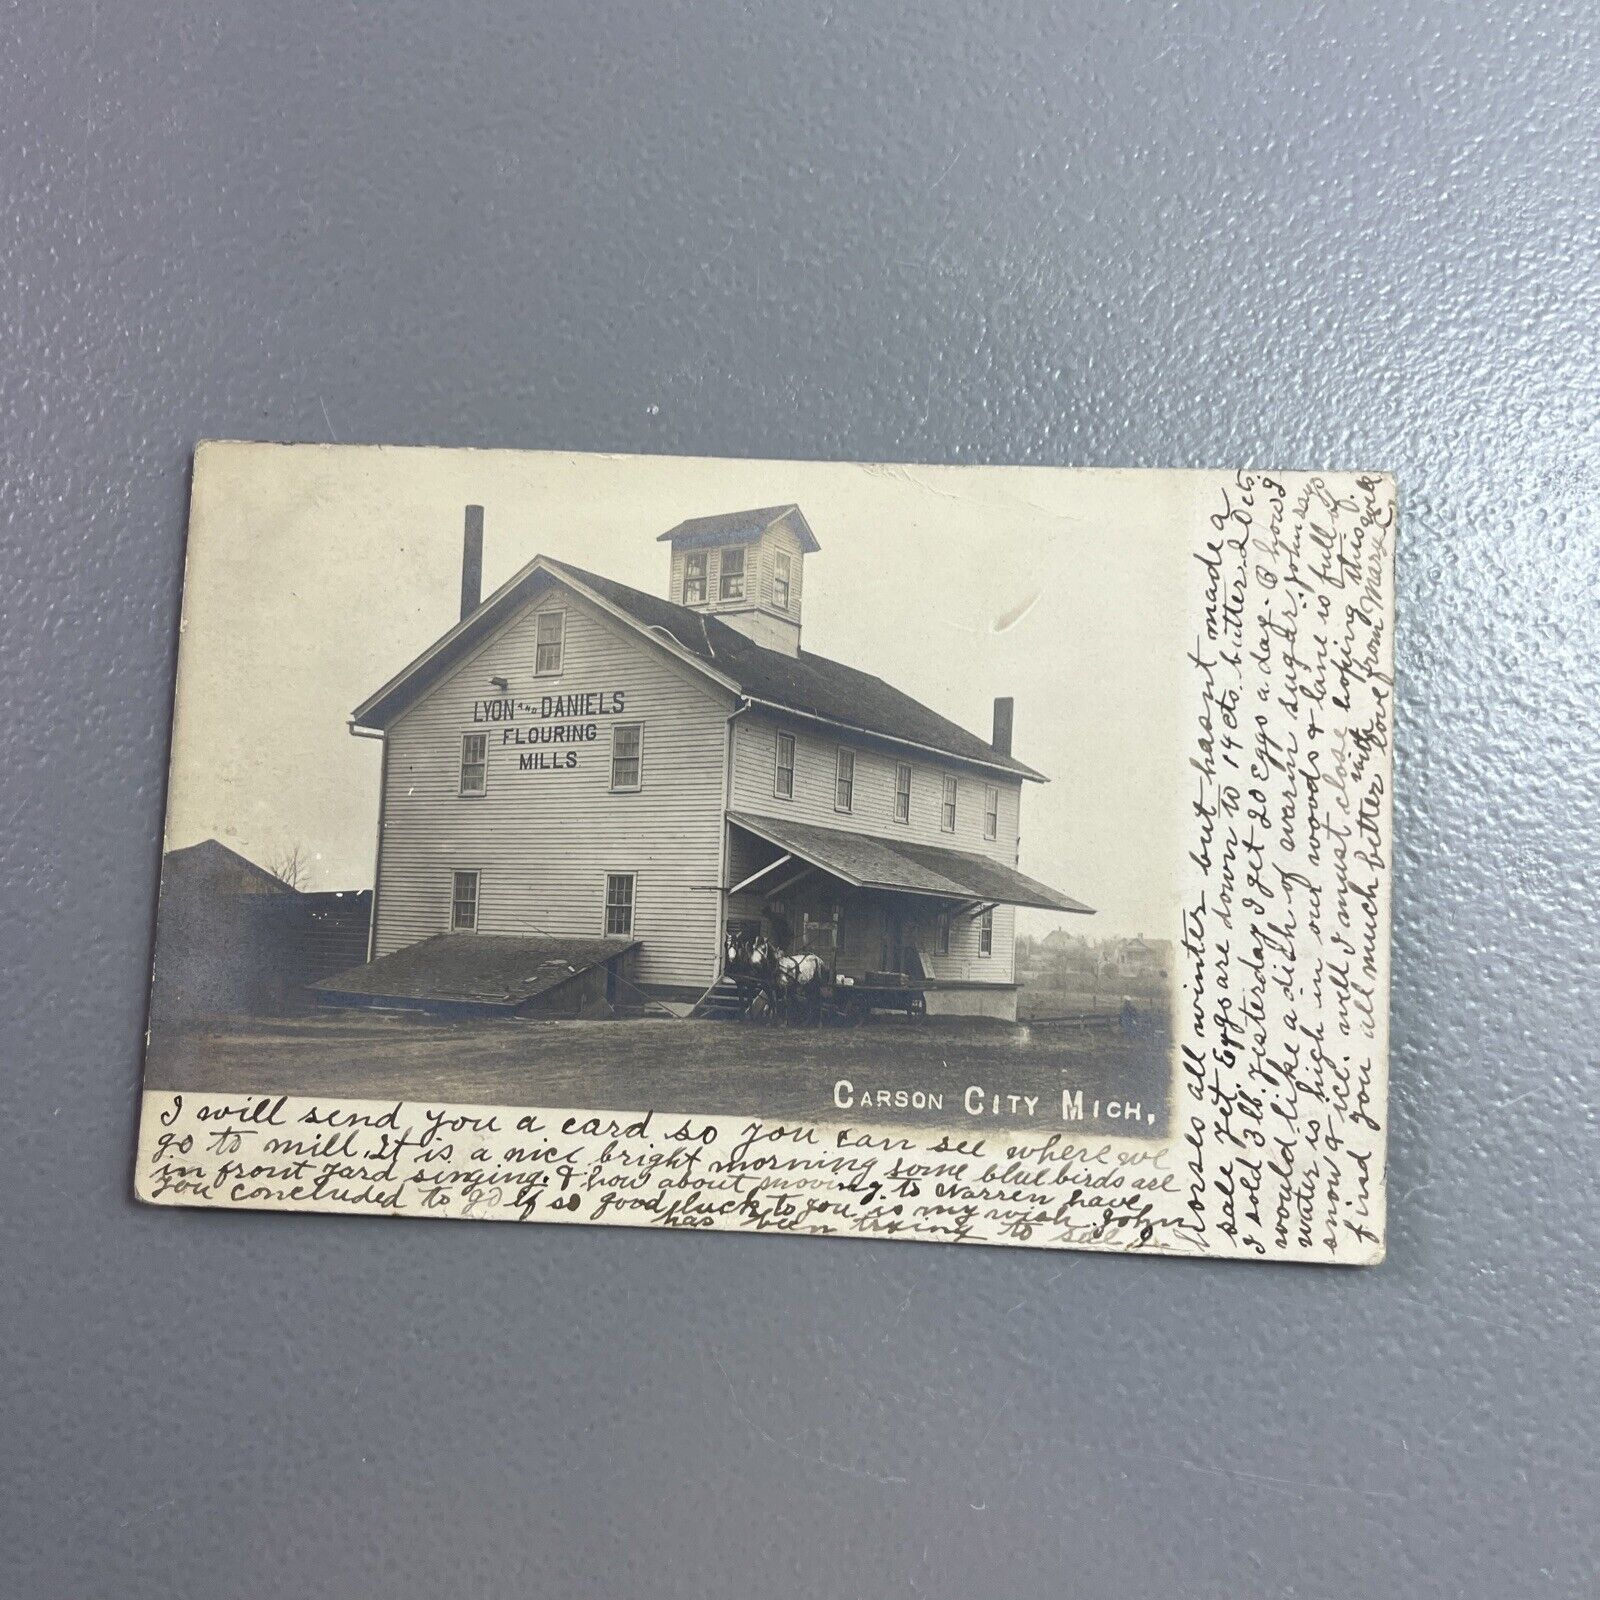 Lyons Daniels Flouring Mills Carson City Michigan Real Photo Postcard Rare 1908